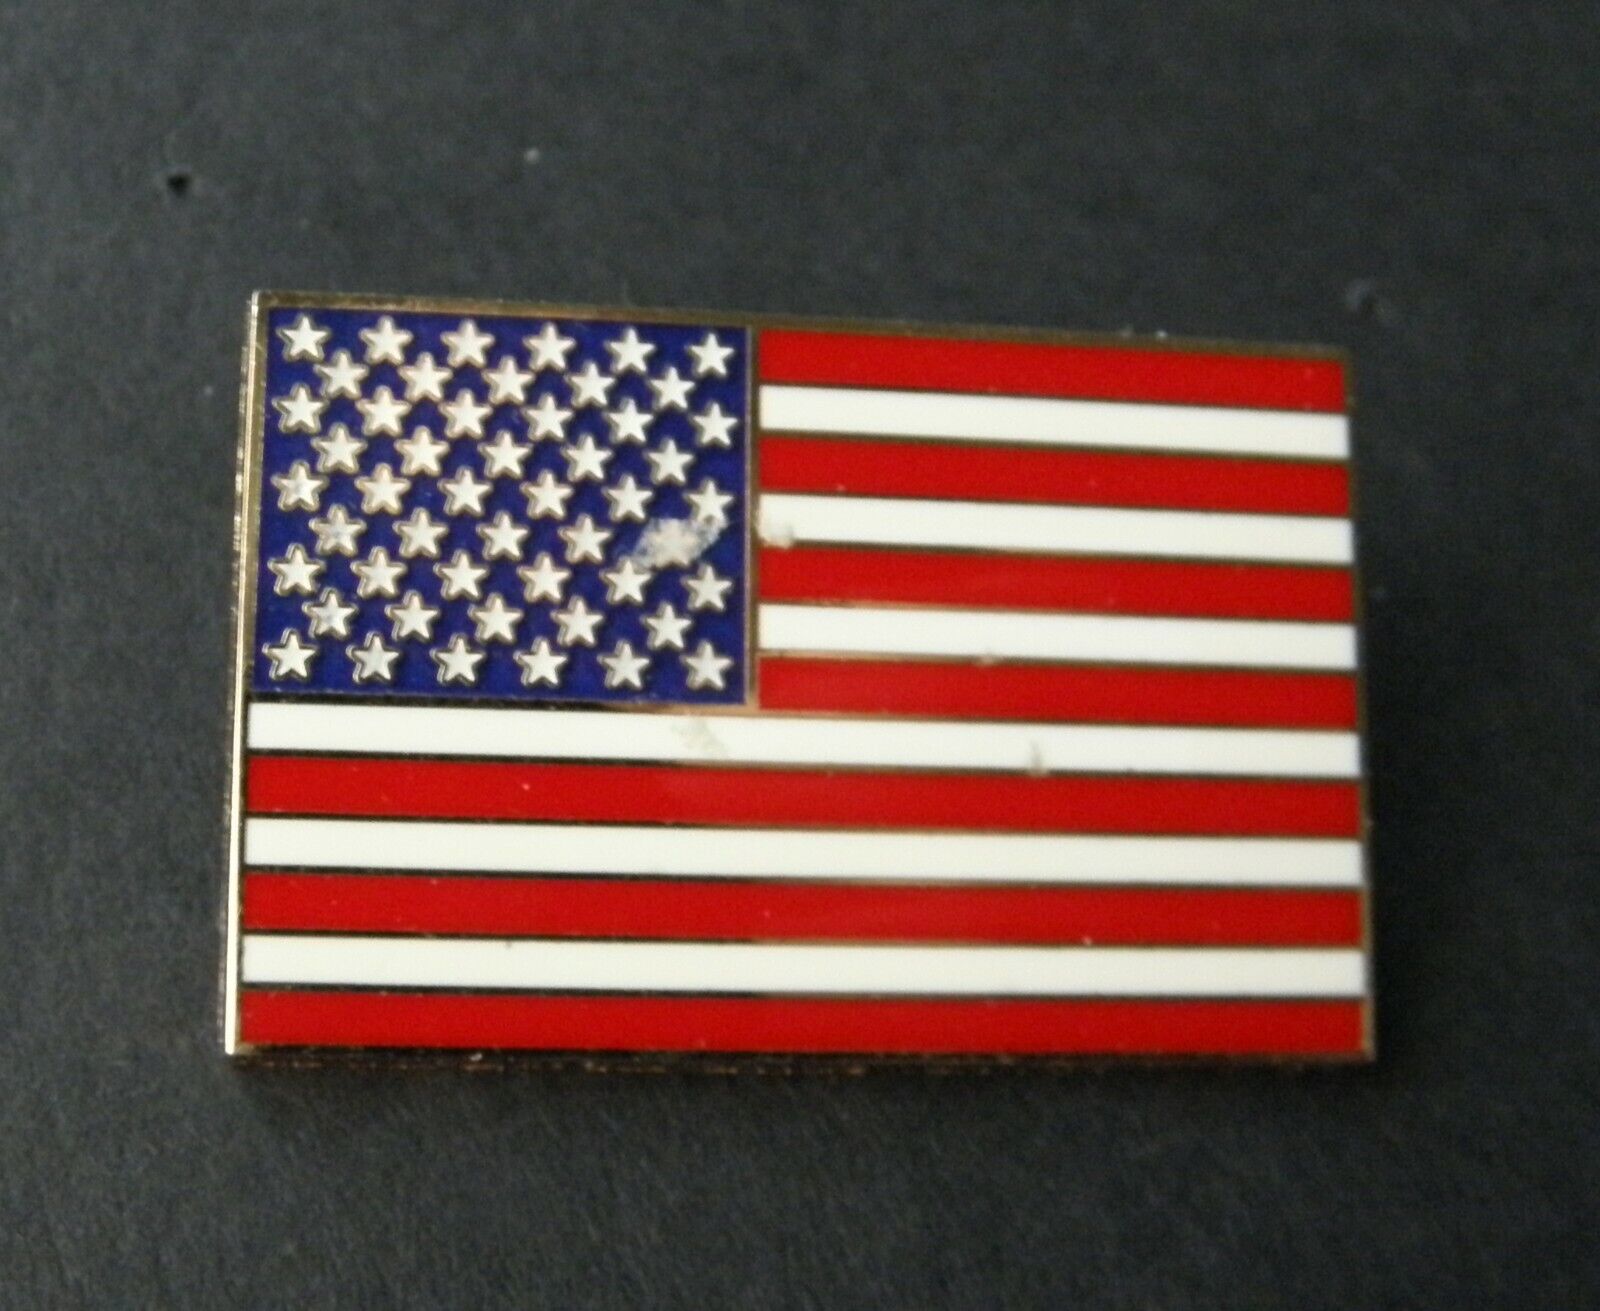 USA AMERICA LARGE USA FLAG LAPEL PIN BADGE 1.5 INCHES